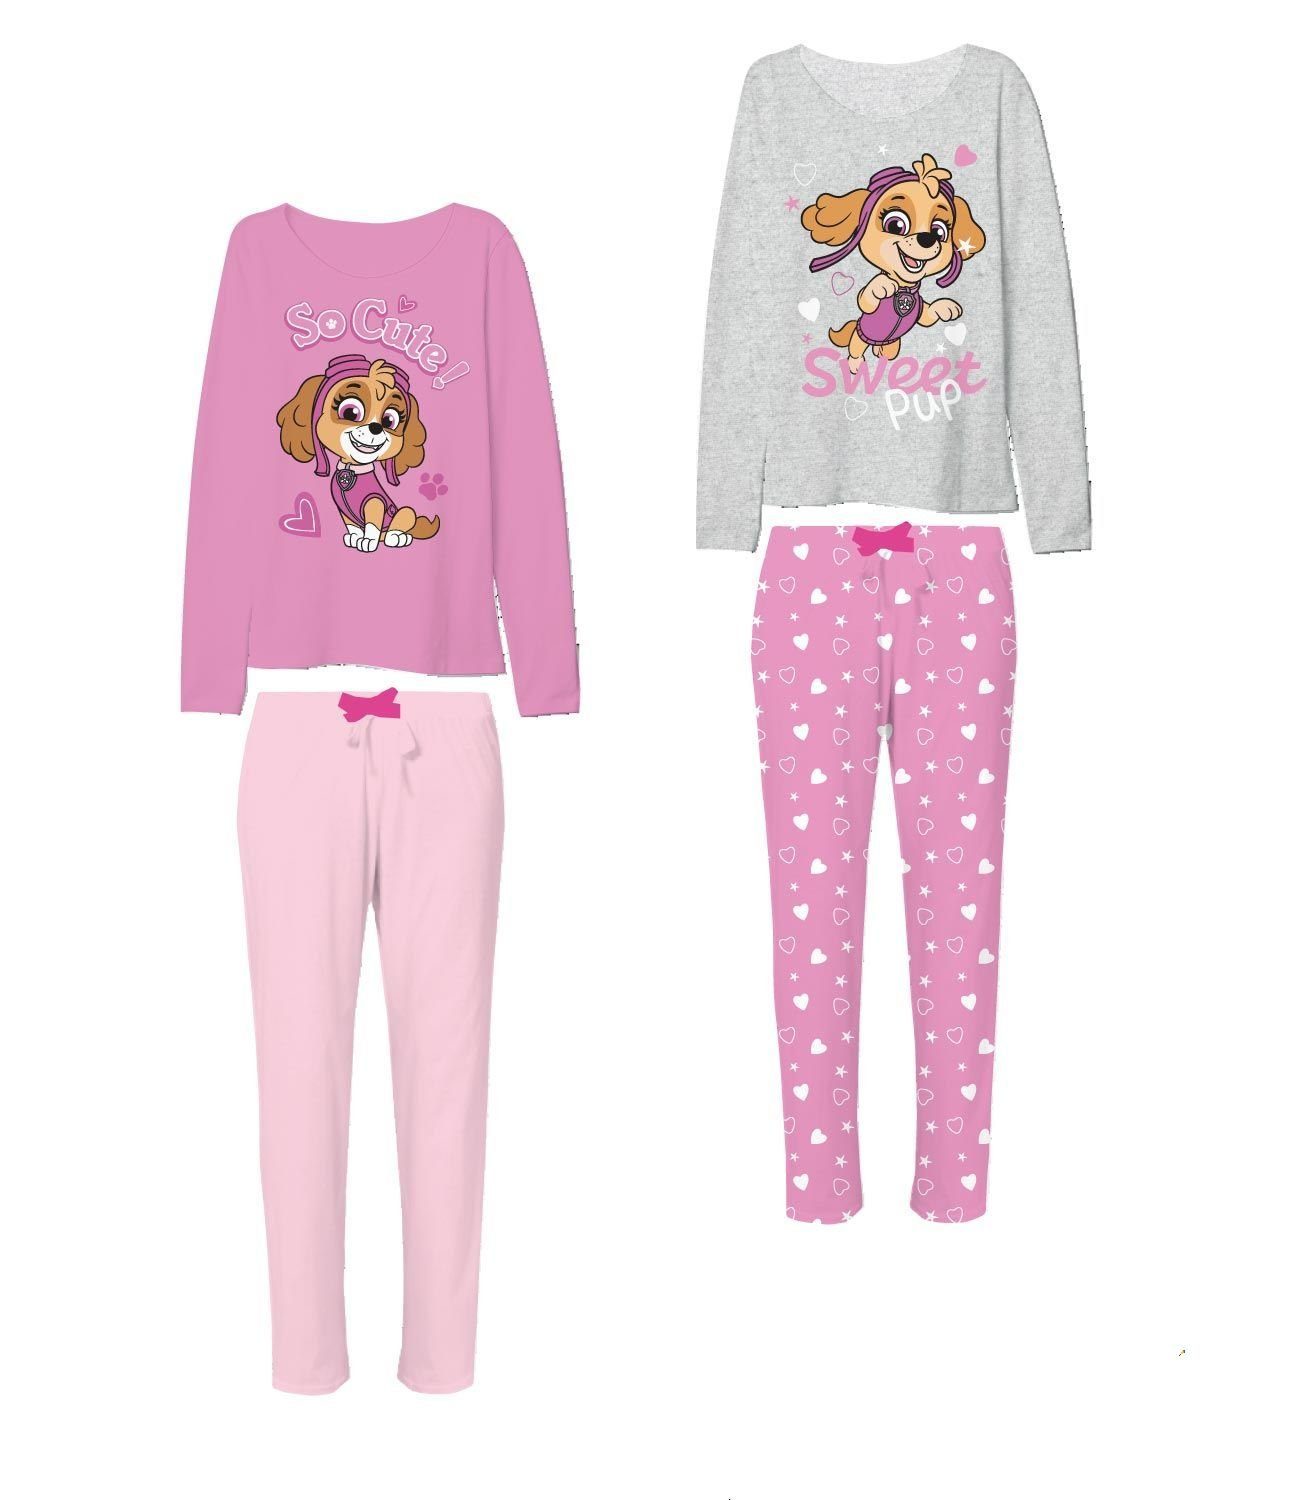 Kinder Kinderunterwäsche PAW PATROL Pyjama 2x PAW PATROL MÄDCHEN PYJAMA SET Doppelpack Mädchen Schlafanzug lang rosa + grau Gr. 